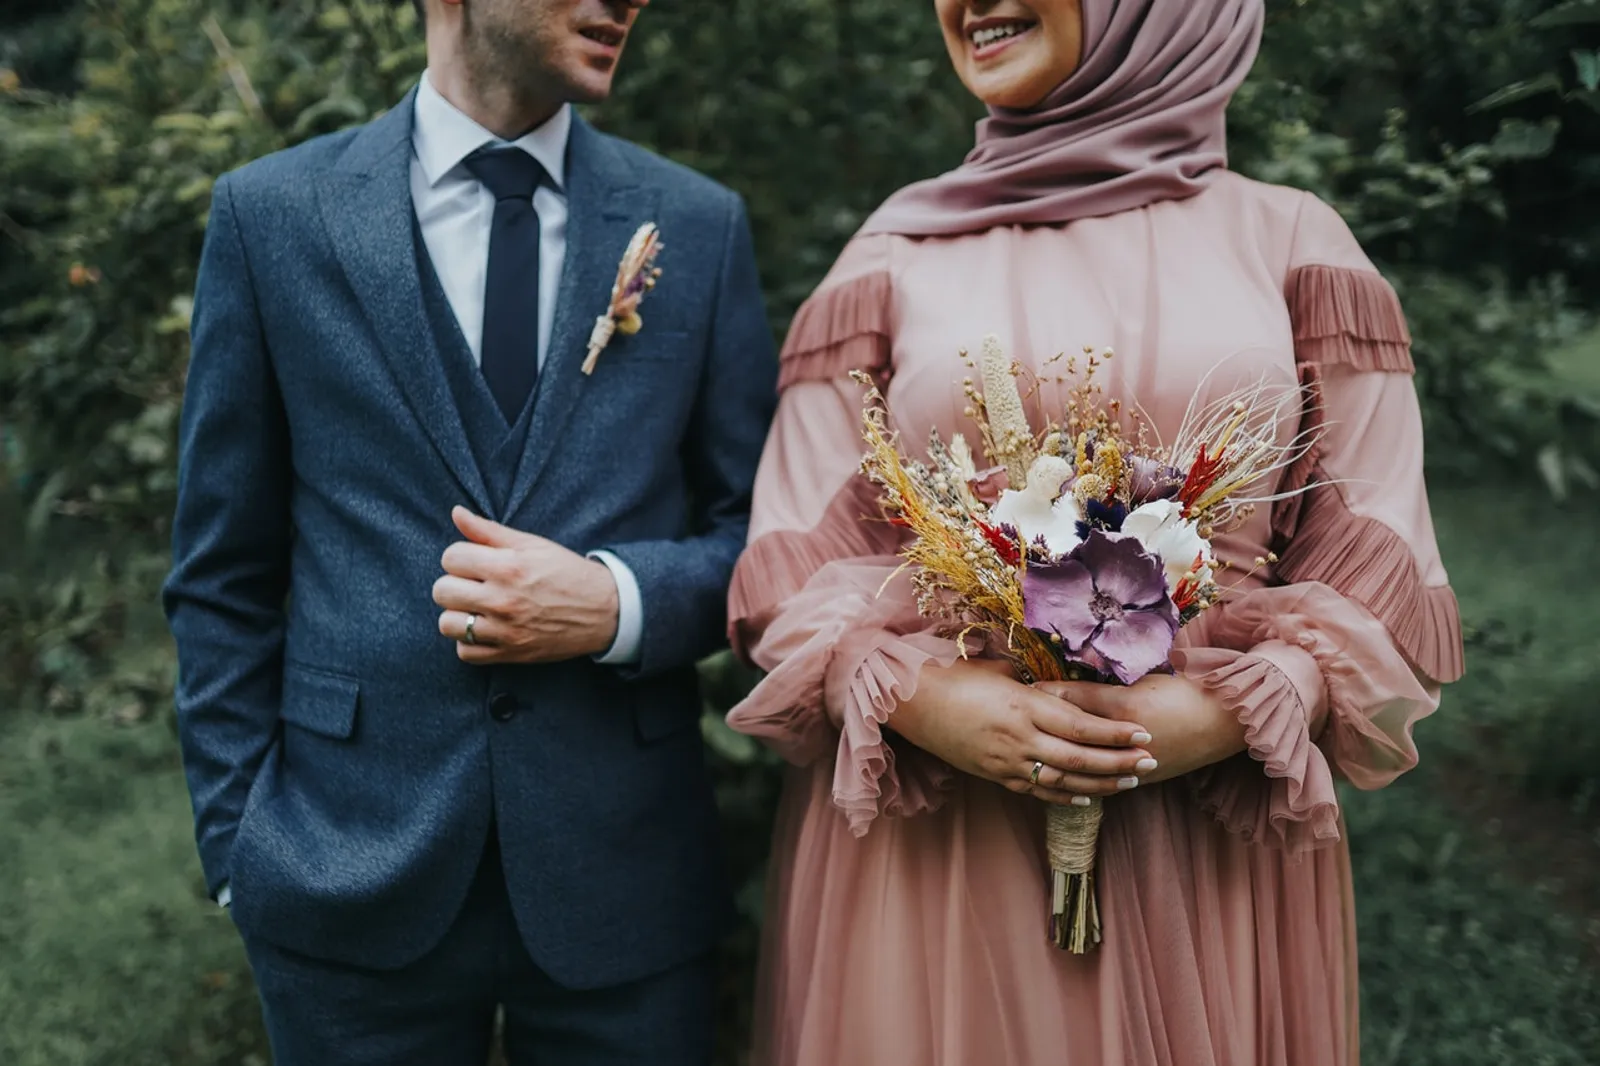 Hukum Suami Menghina Istri dalam Agama Islam